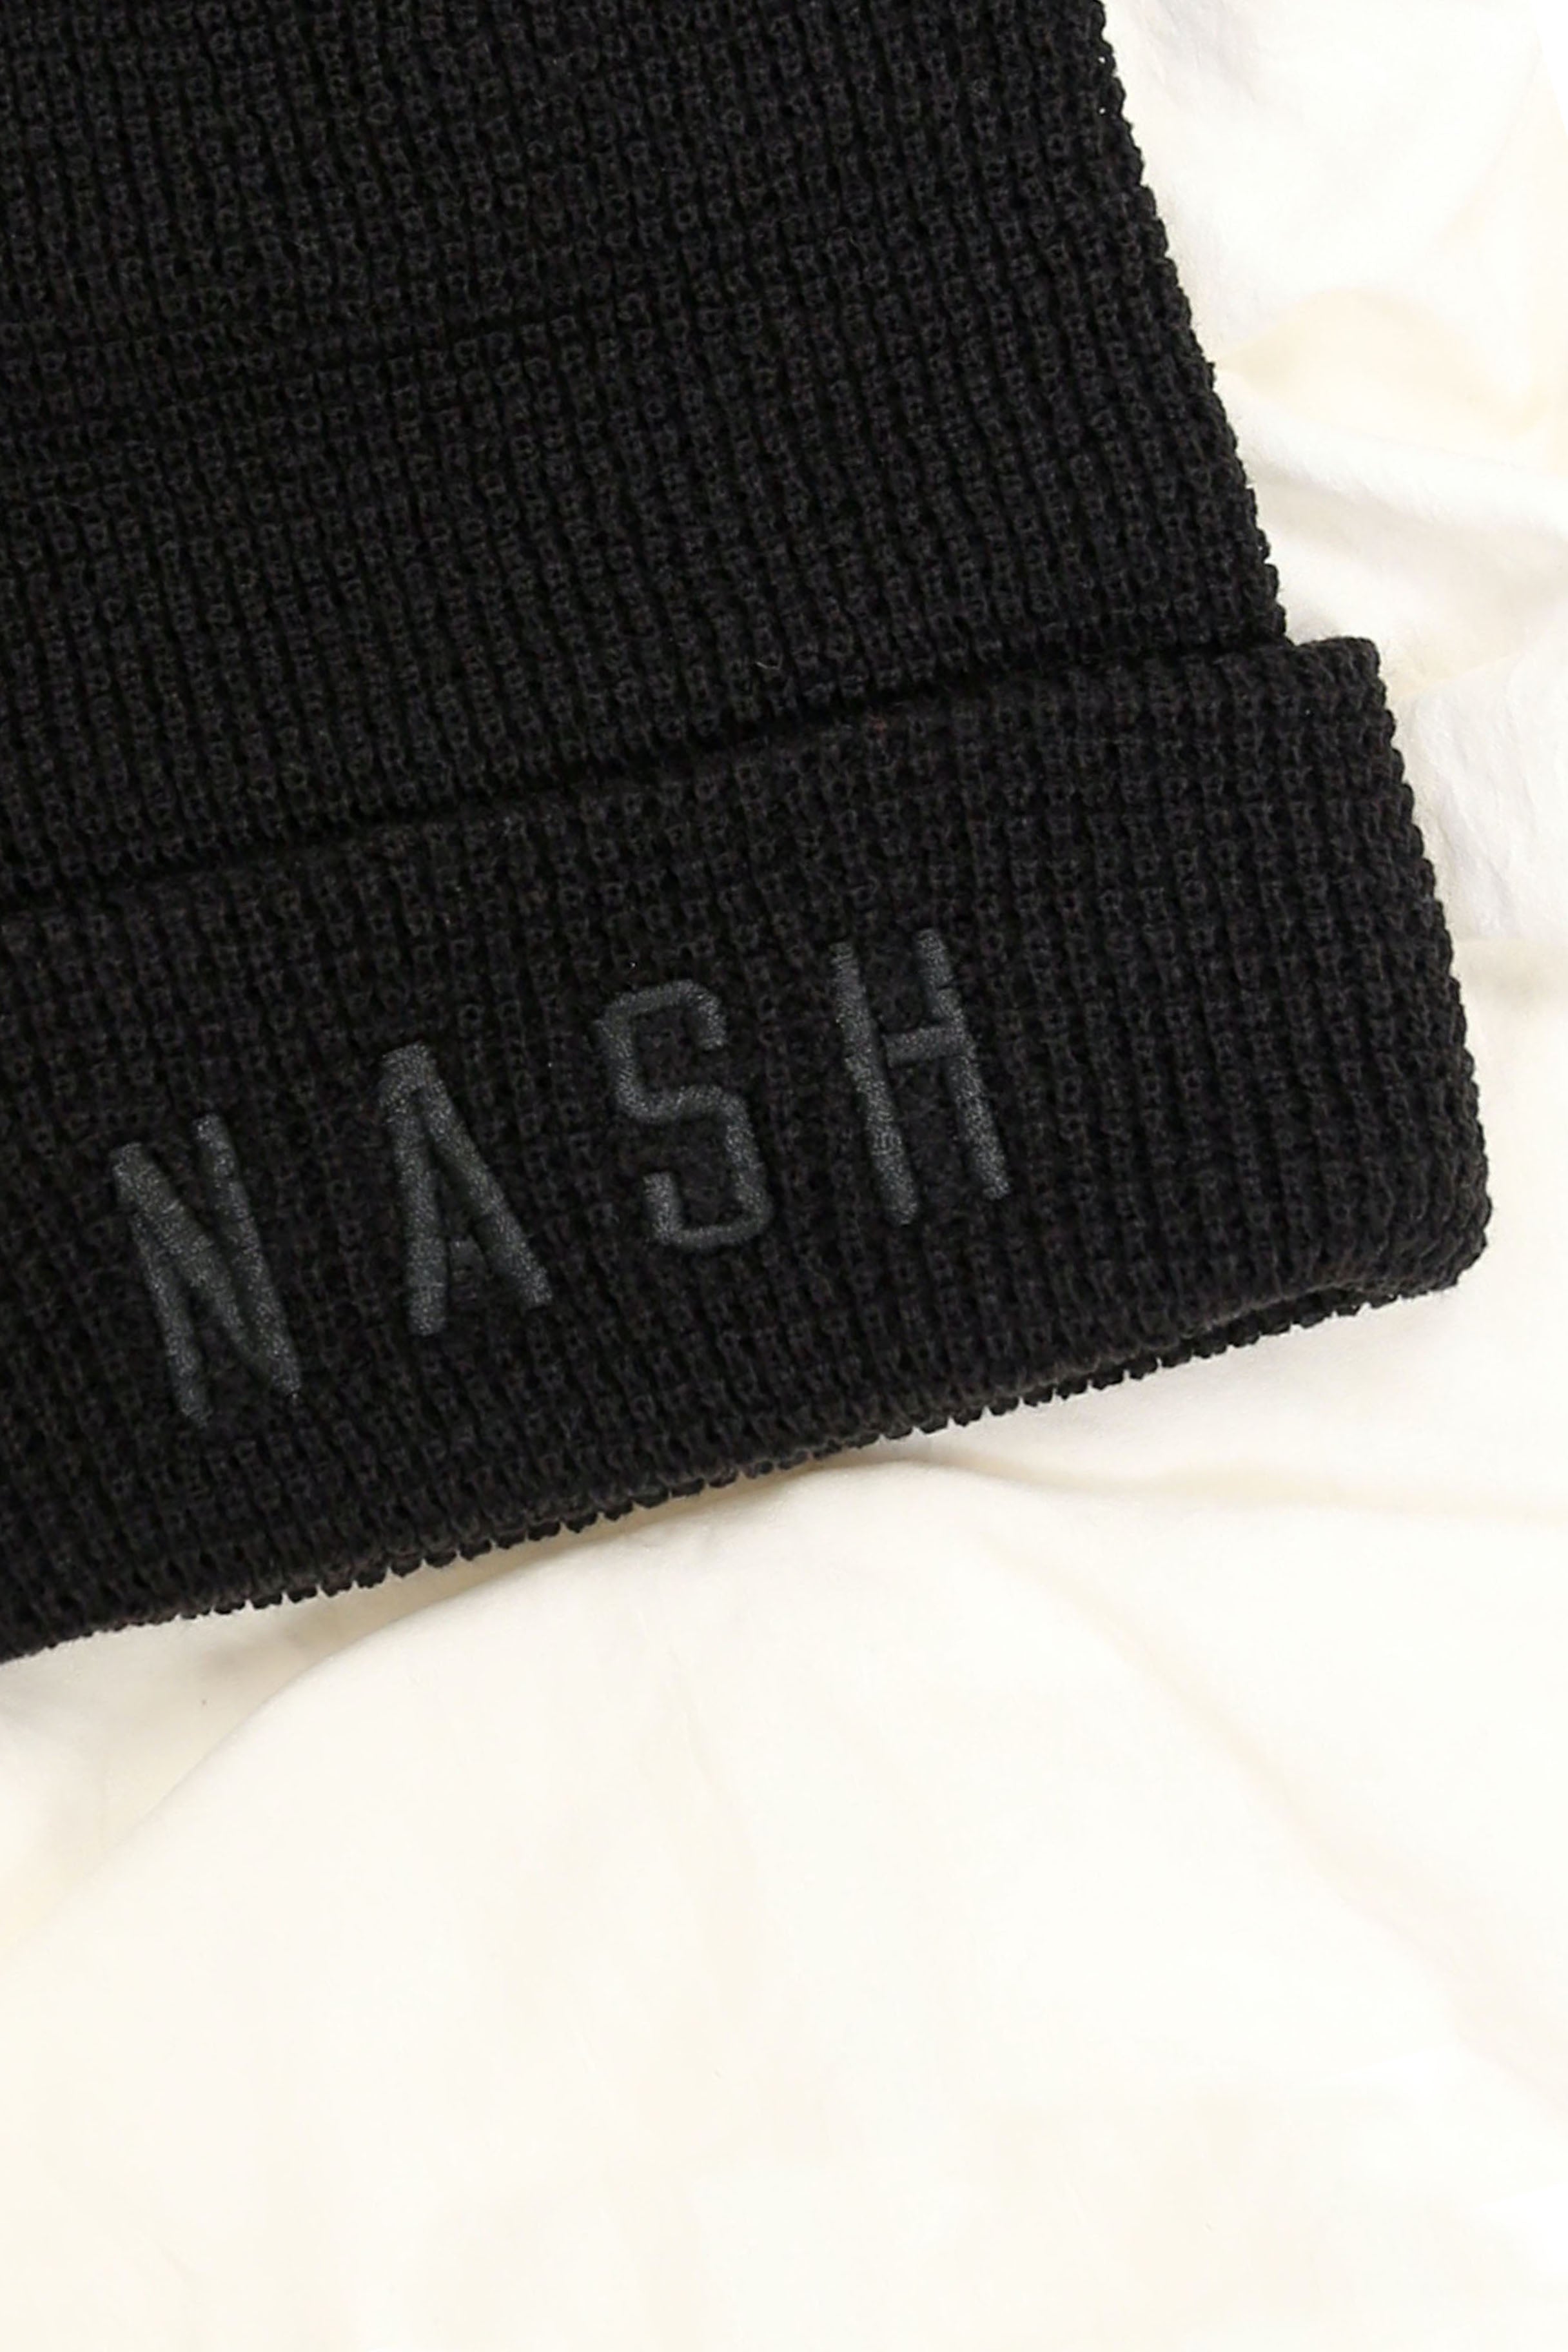 NASH Waffle Knit Beanie [Black]